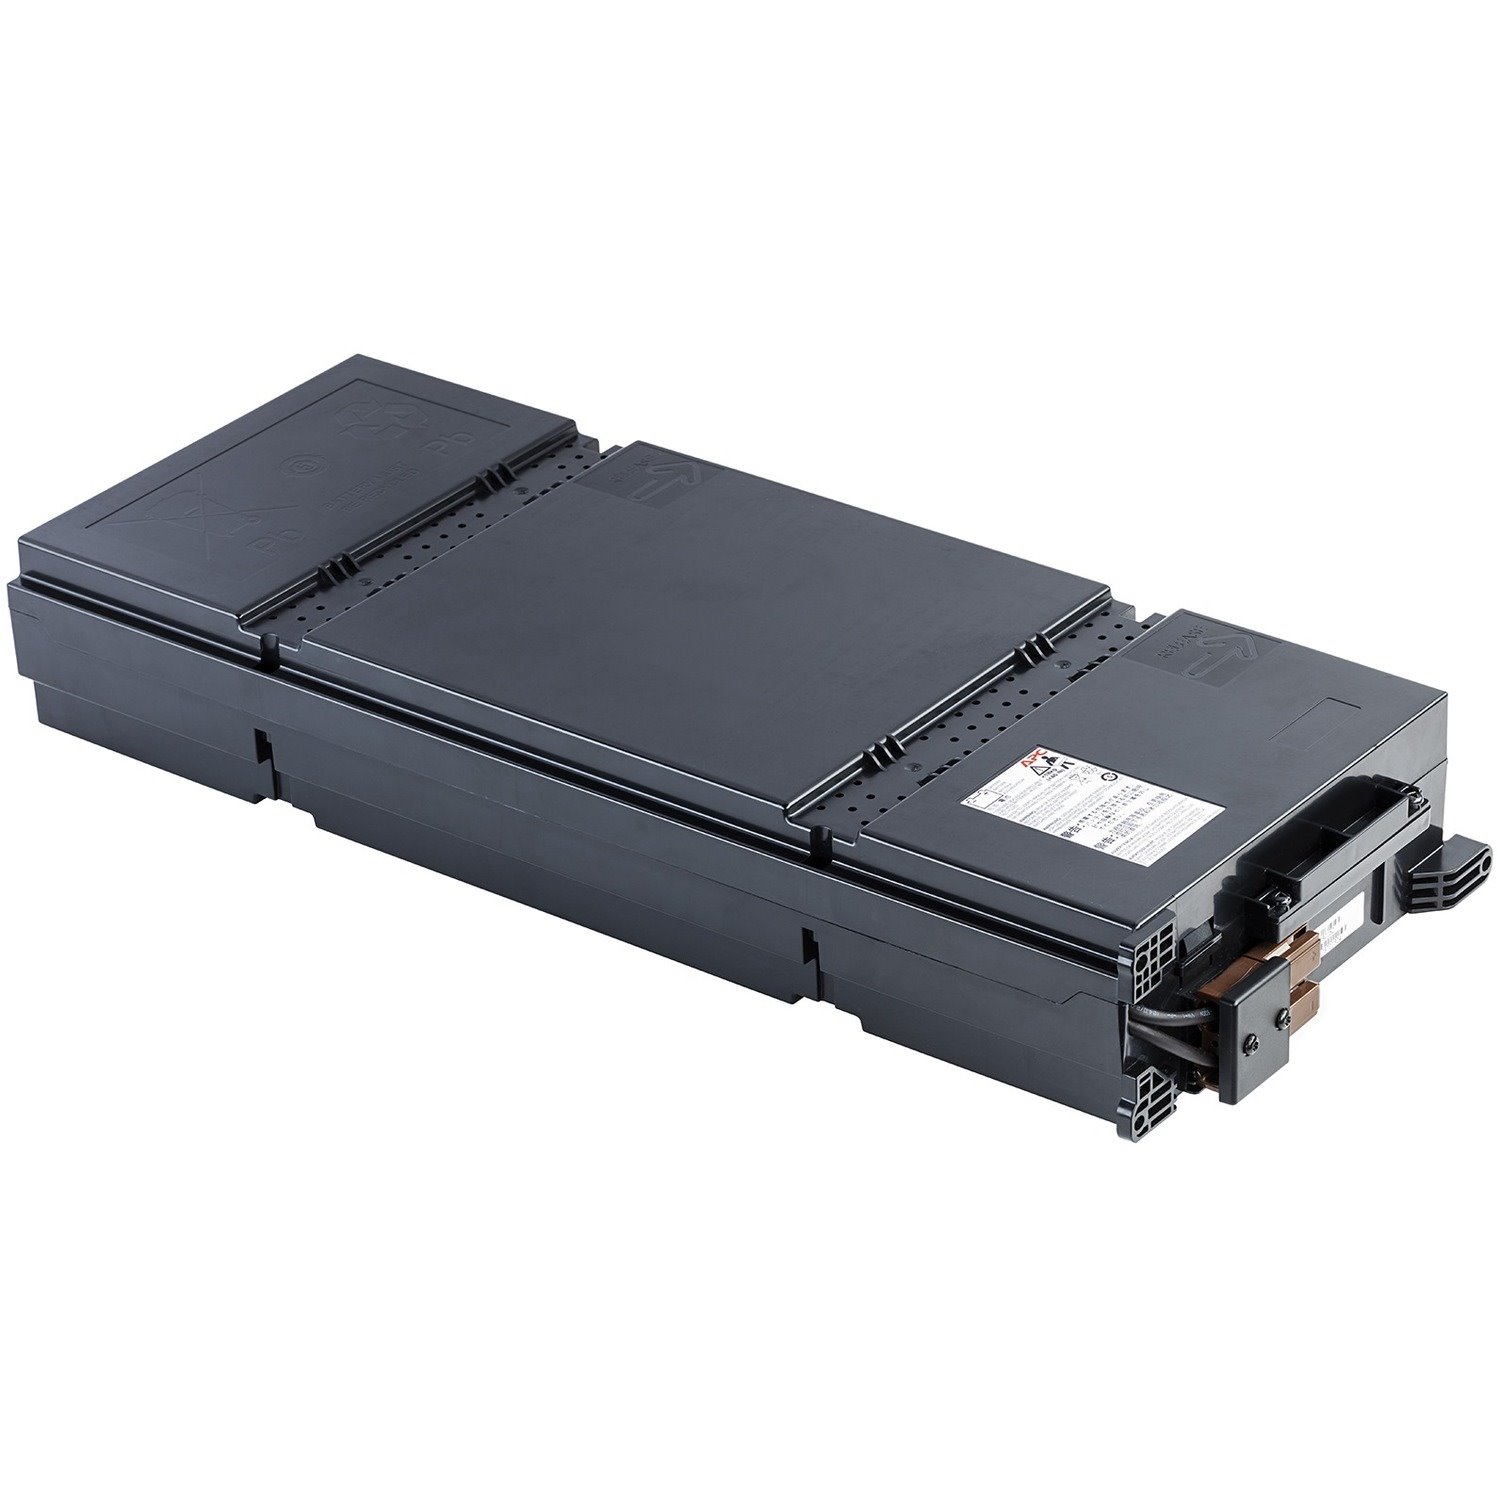 APCRBC152 - APC by Schneider Electric UPS Battery Pack #152